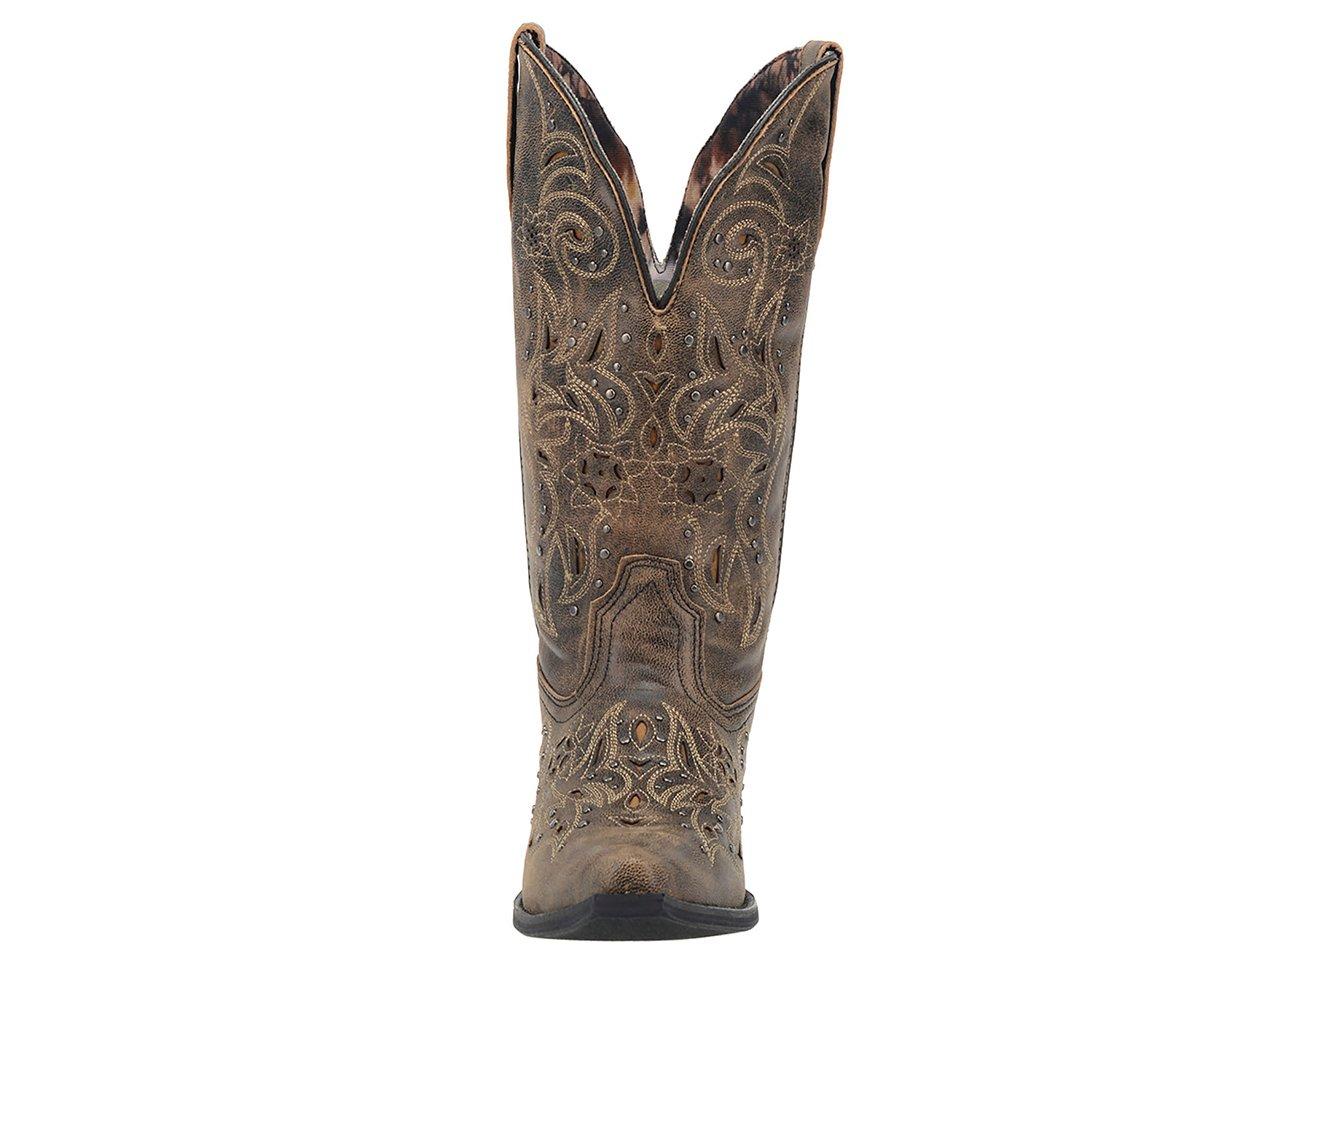 Women's Laredo Western Boots Vanessa Western Boots